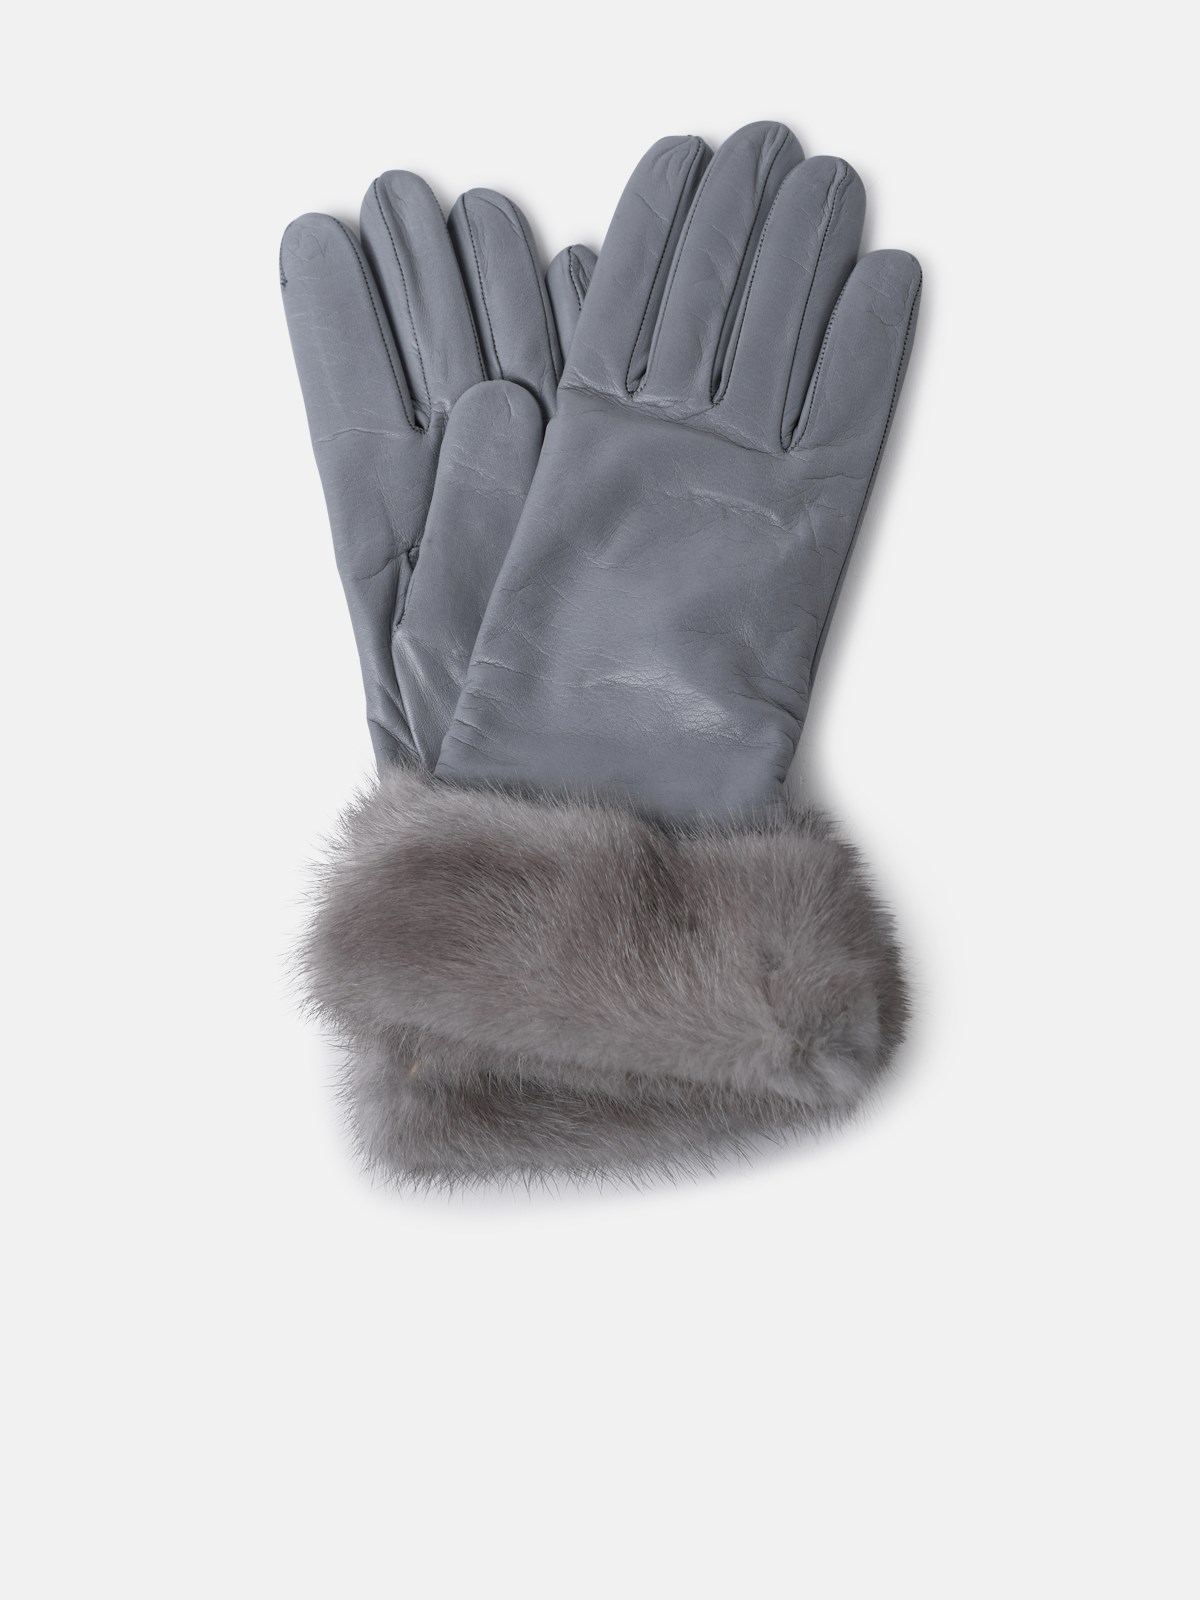 Sofia Gants Pearl Grey Nappa Leather Gloves